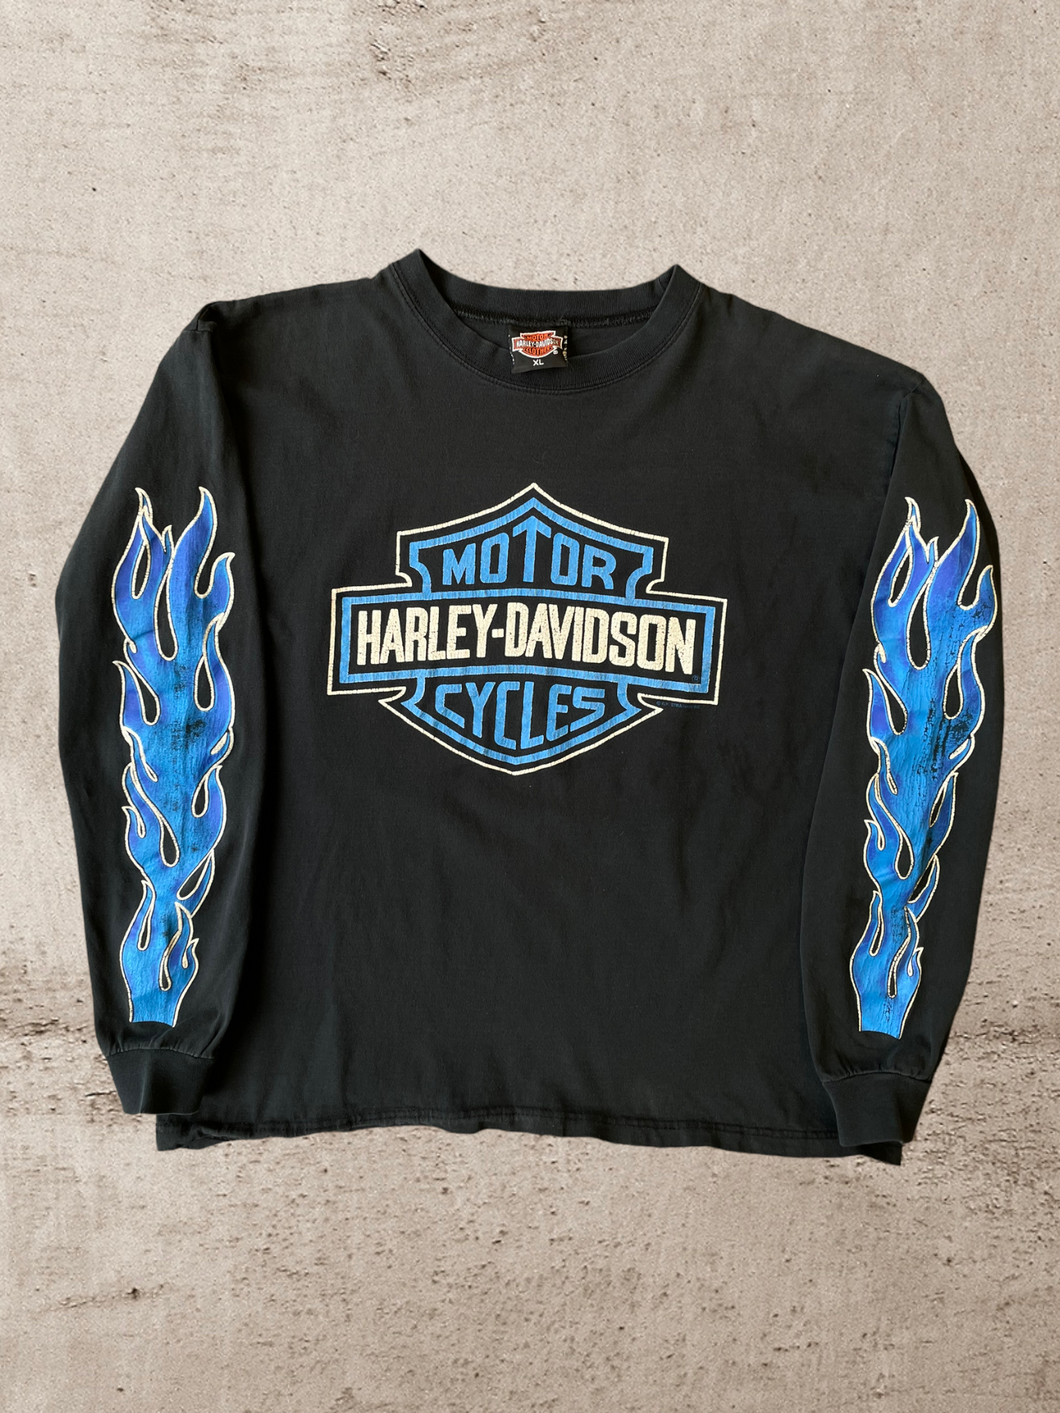 90s Harley Davidson Flame Long Sleeve T-Shirt - Large